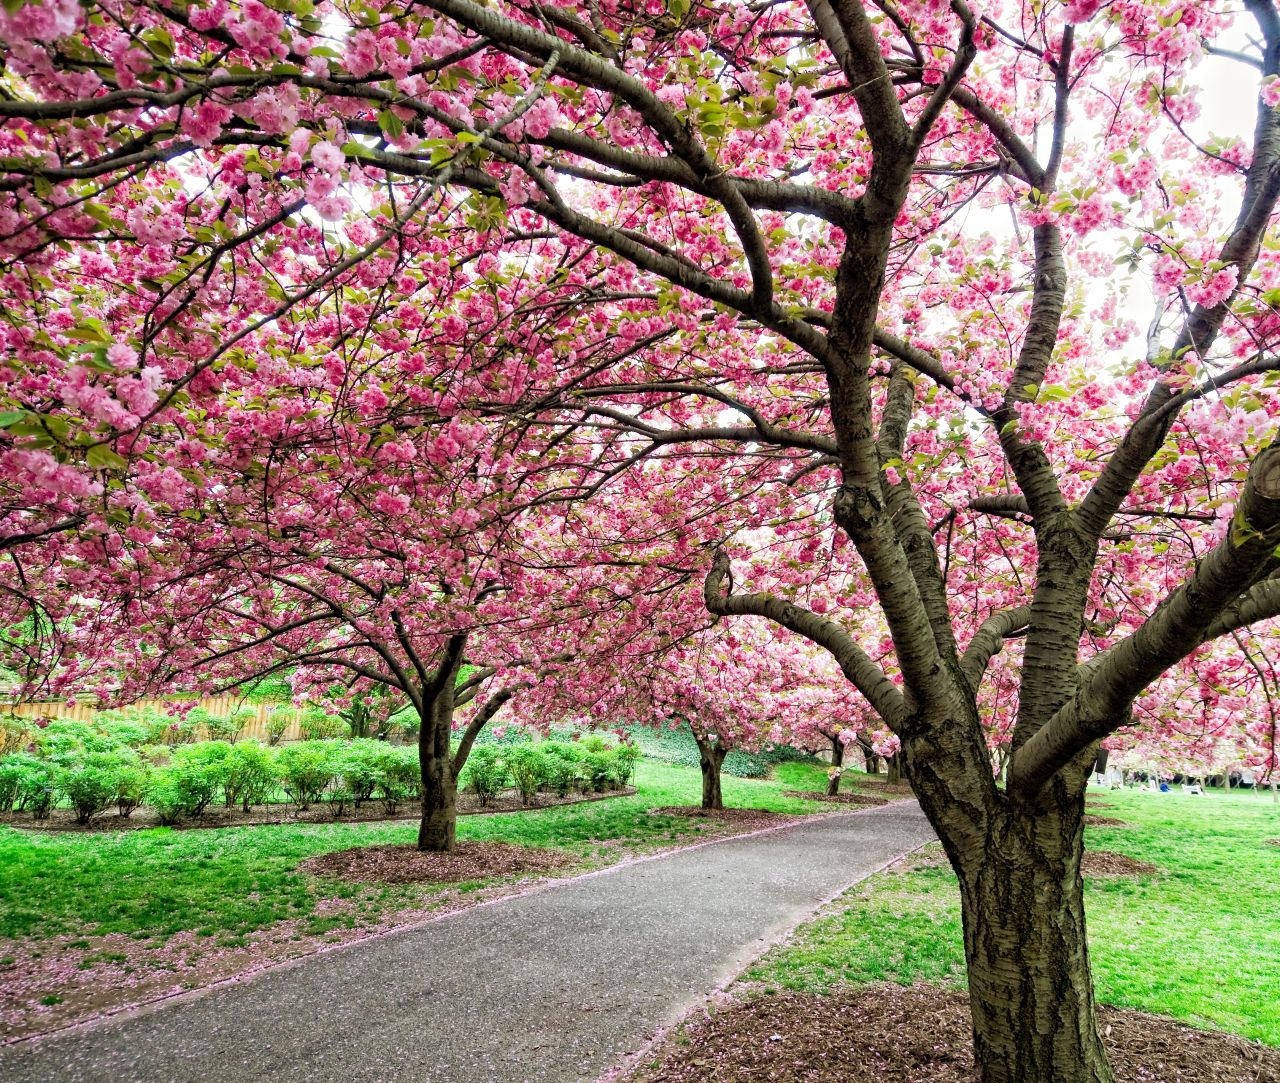 Brooklyn Botanic Garden's Cherry Esplanade is one of the highlights of cherry blossom season.